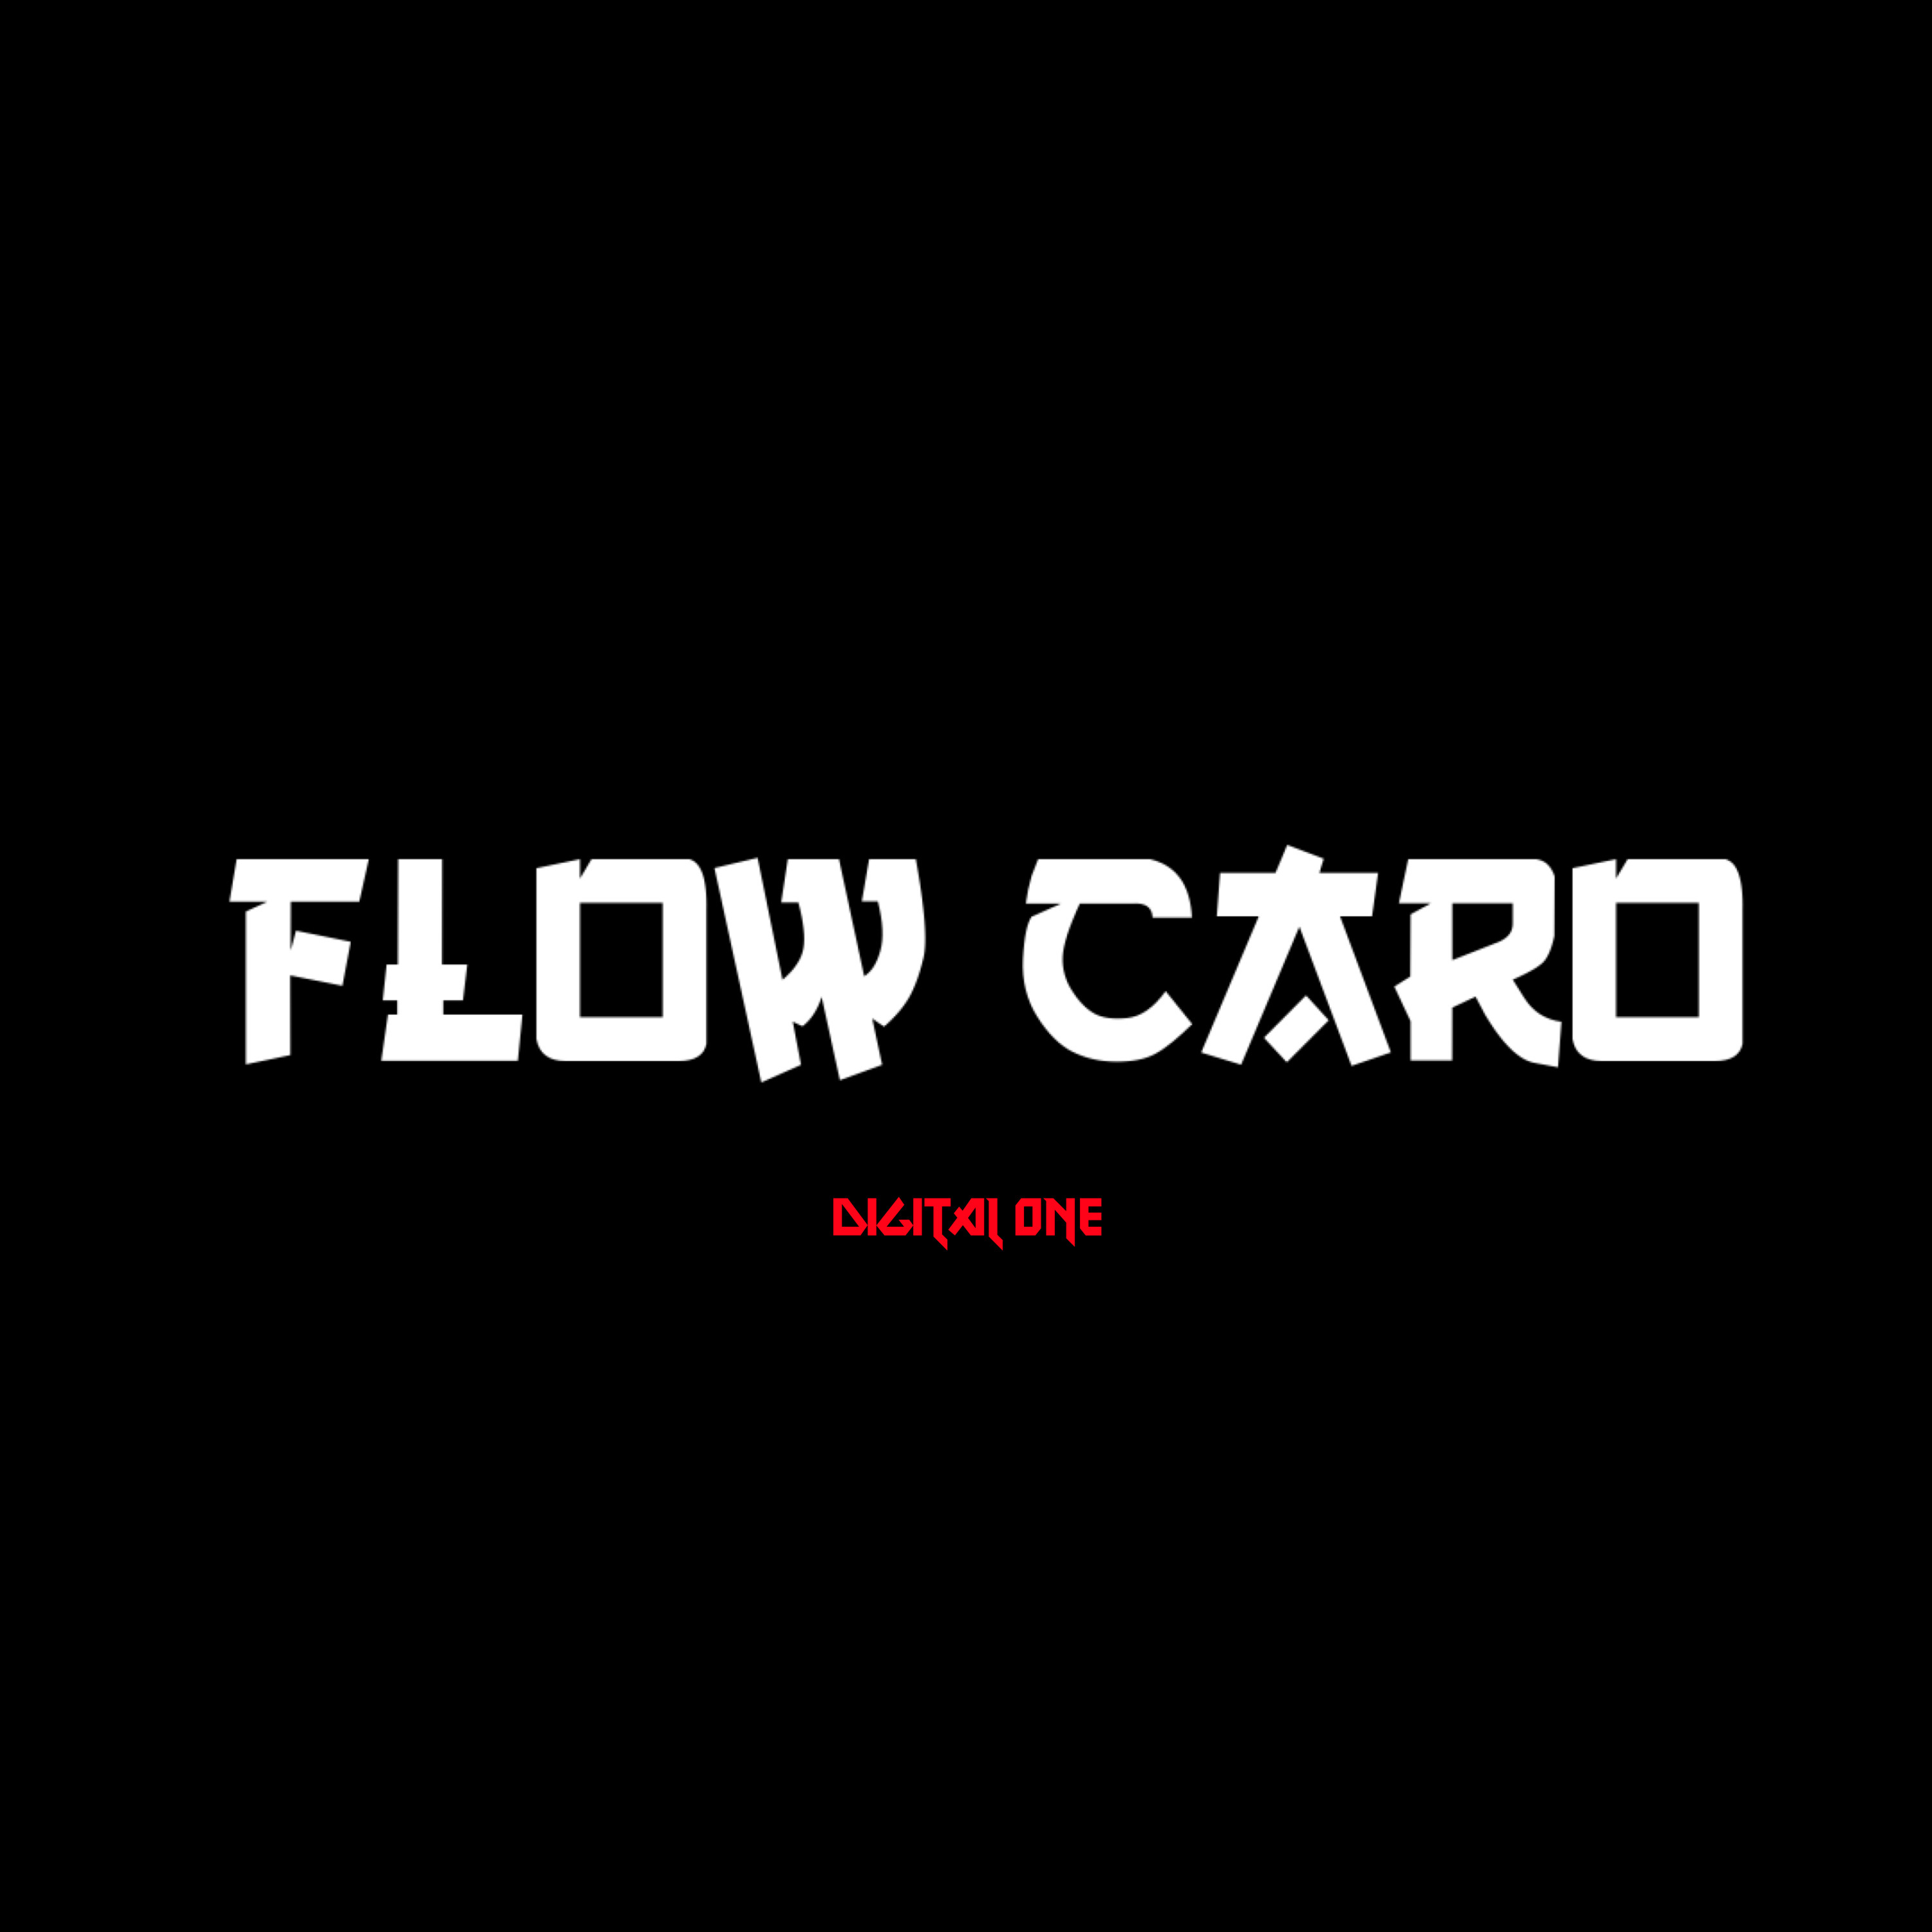 Digital One - Flow Caro